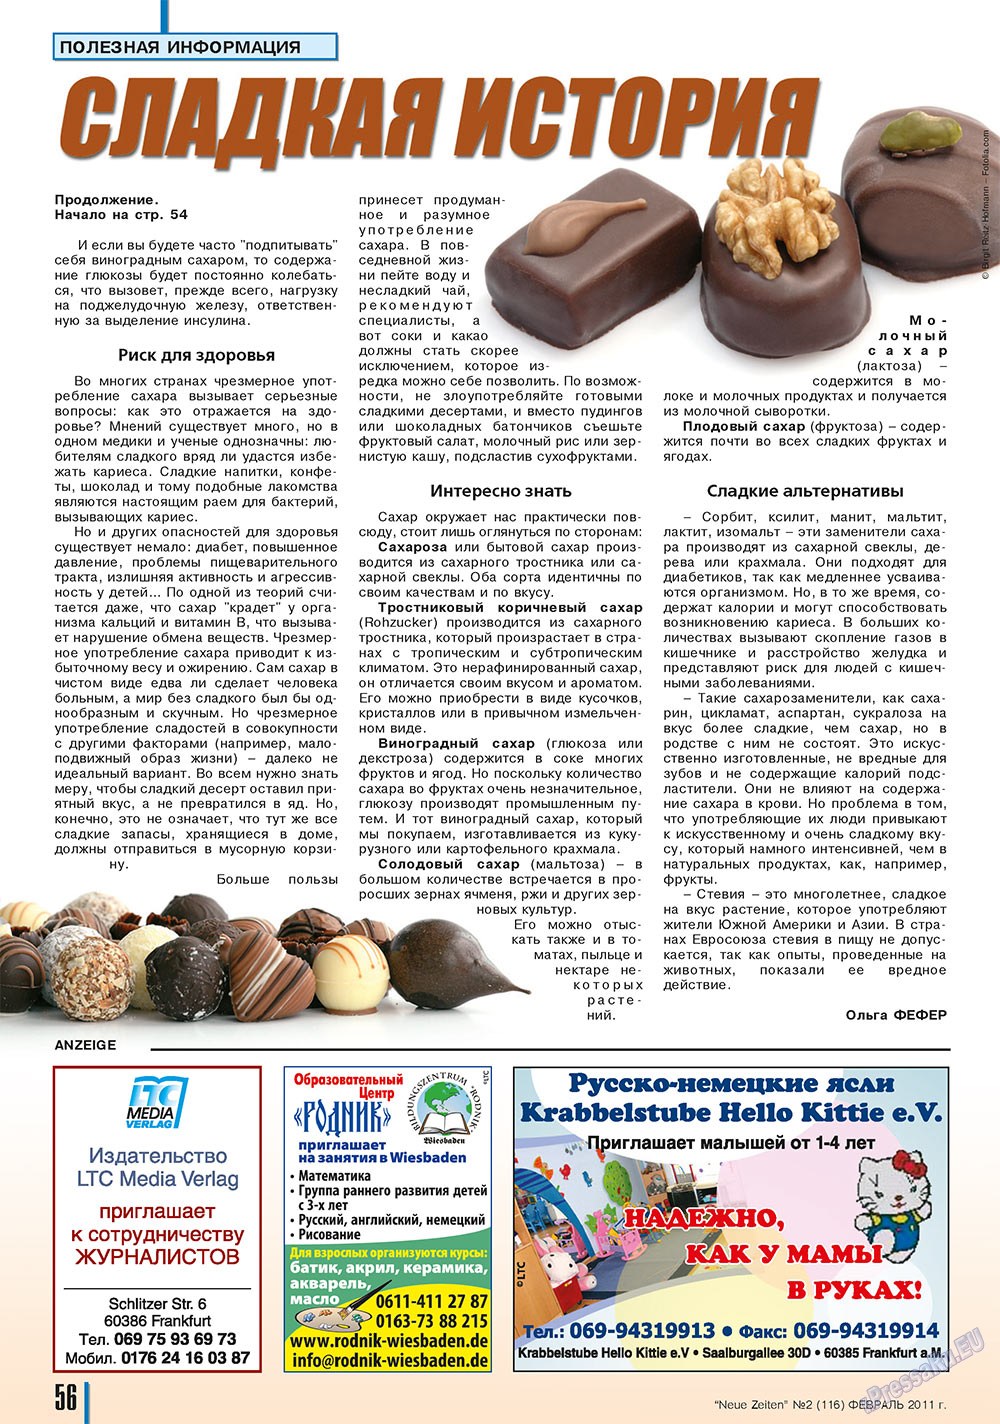 Neue Zeiten (журнал). 2011 год, номер 2, стр. 56